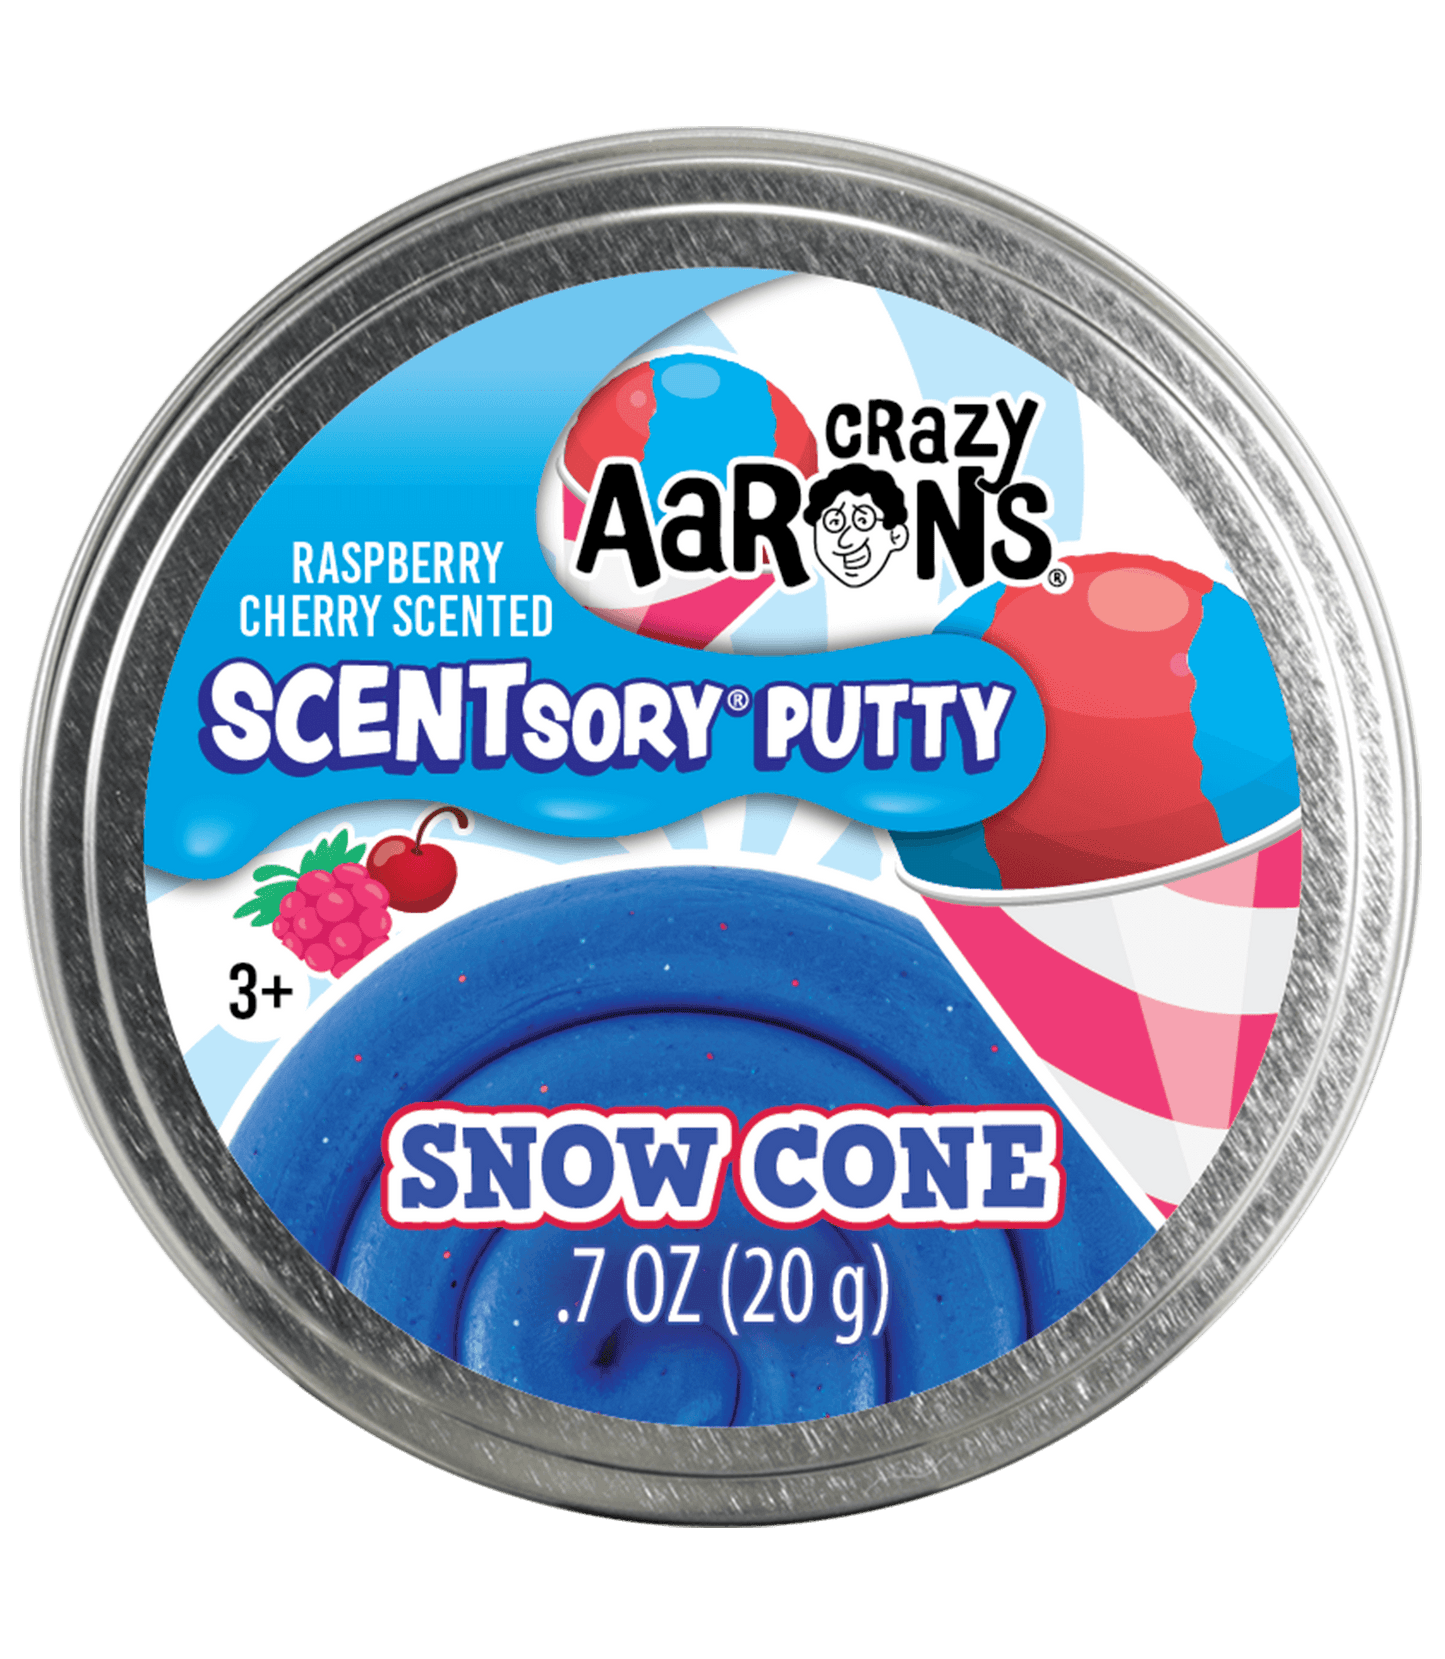 Crazy Aaron's SCENTsory Putty SNOW CONE